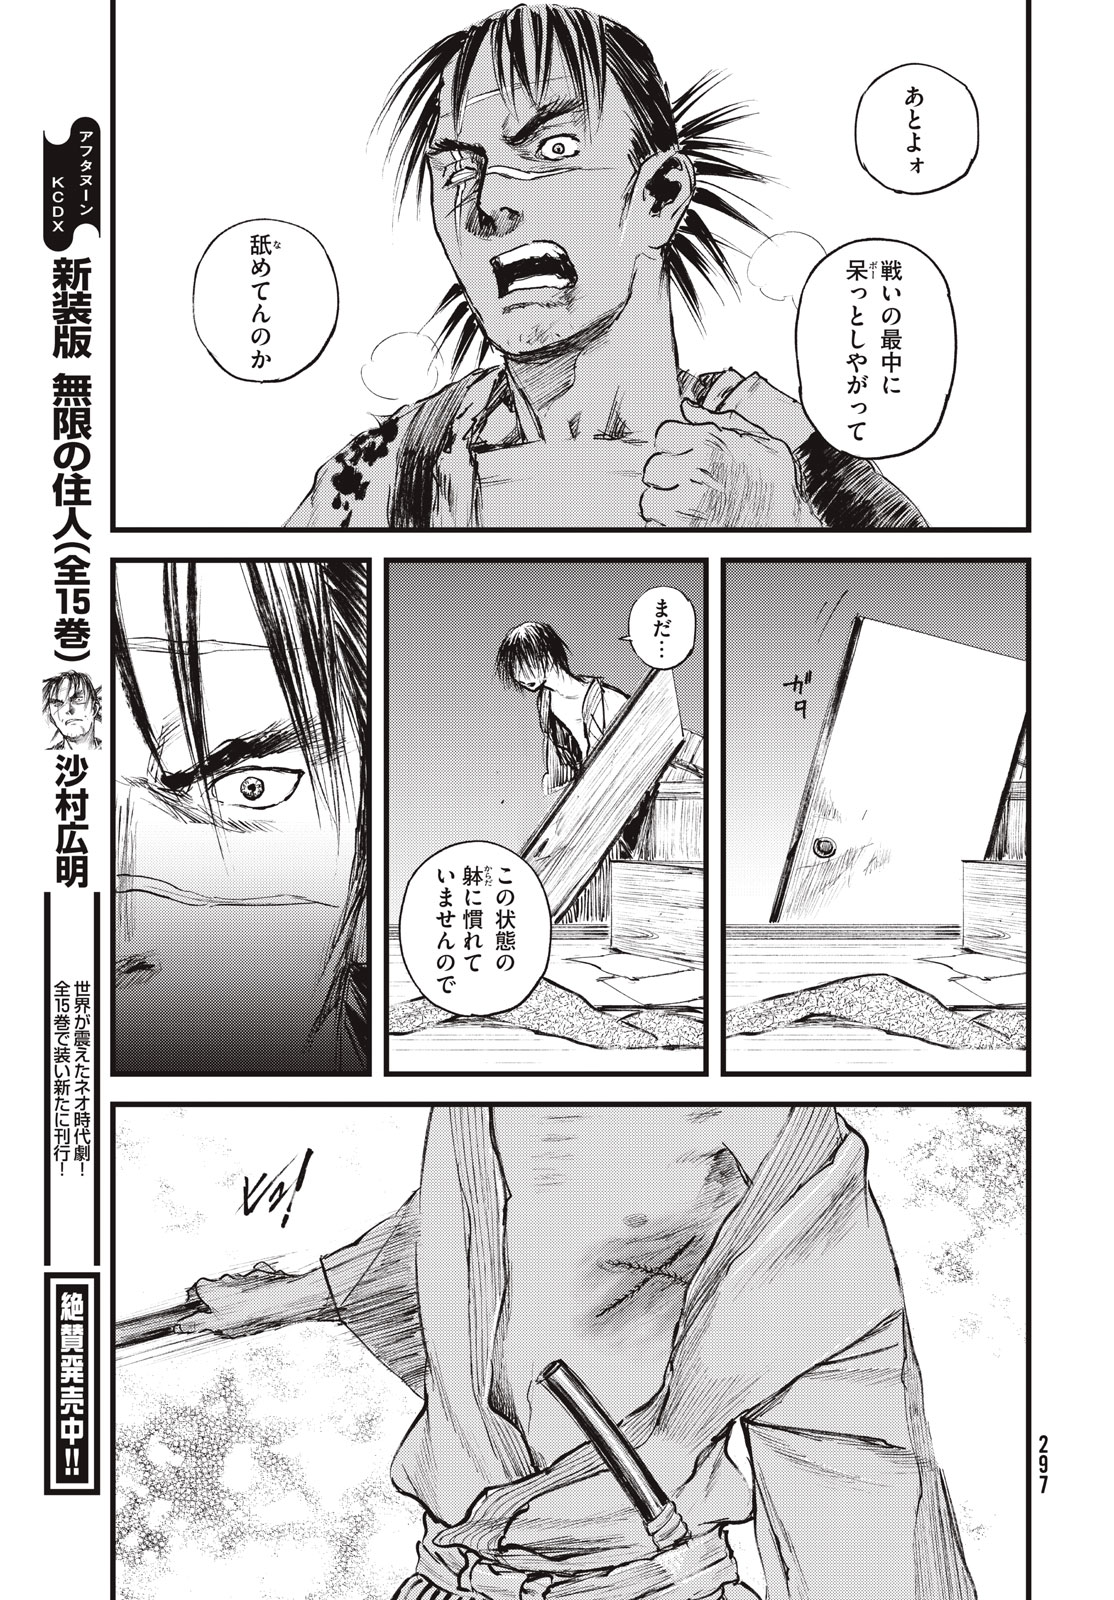 Blade of the Immortal: Bakumatsu Arc - Chapter 57 - Page 25